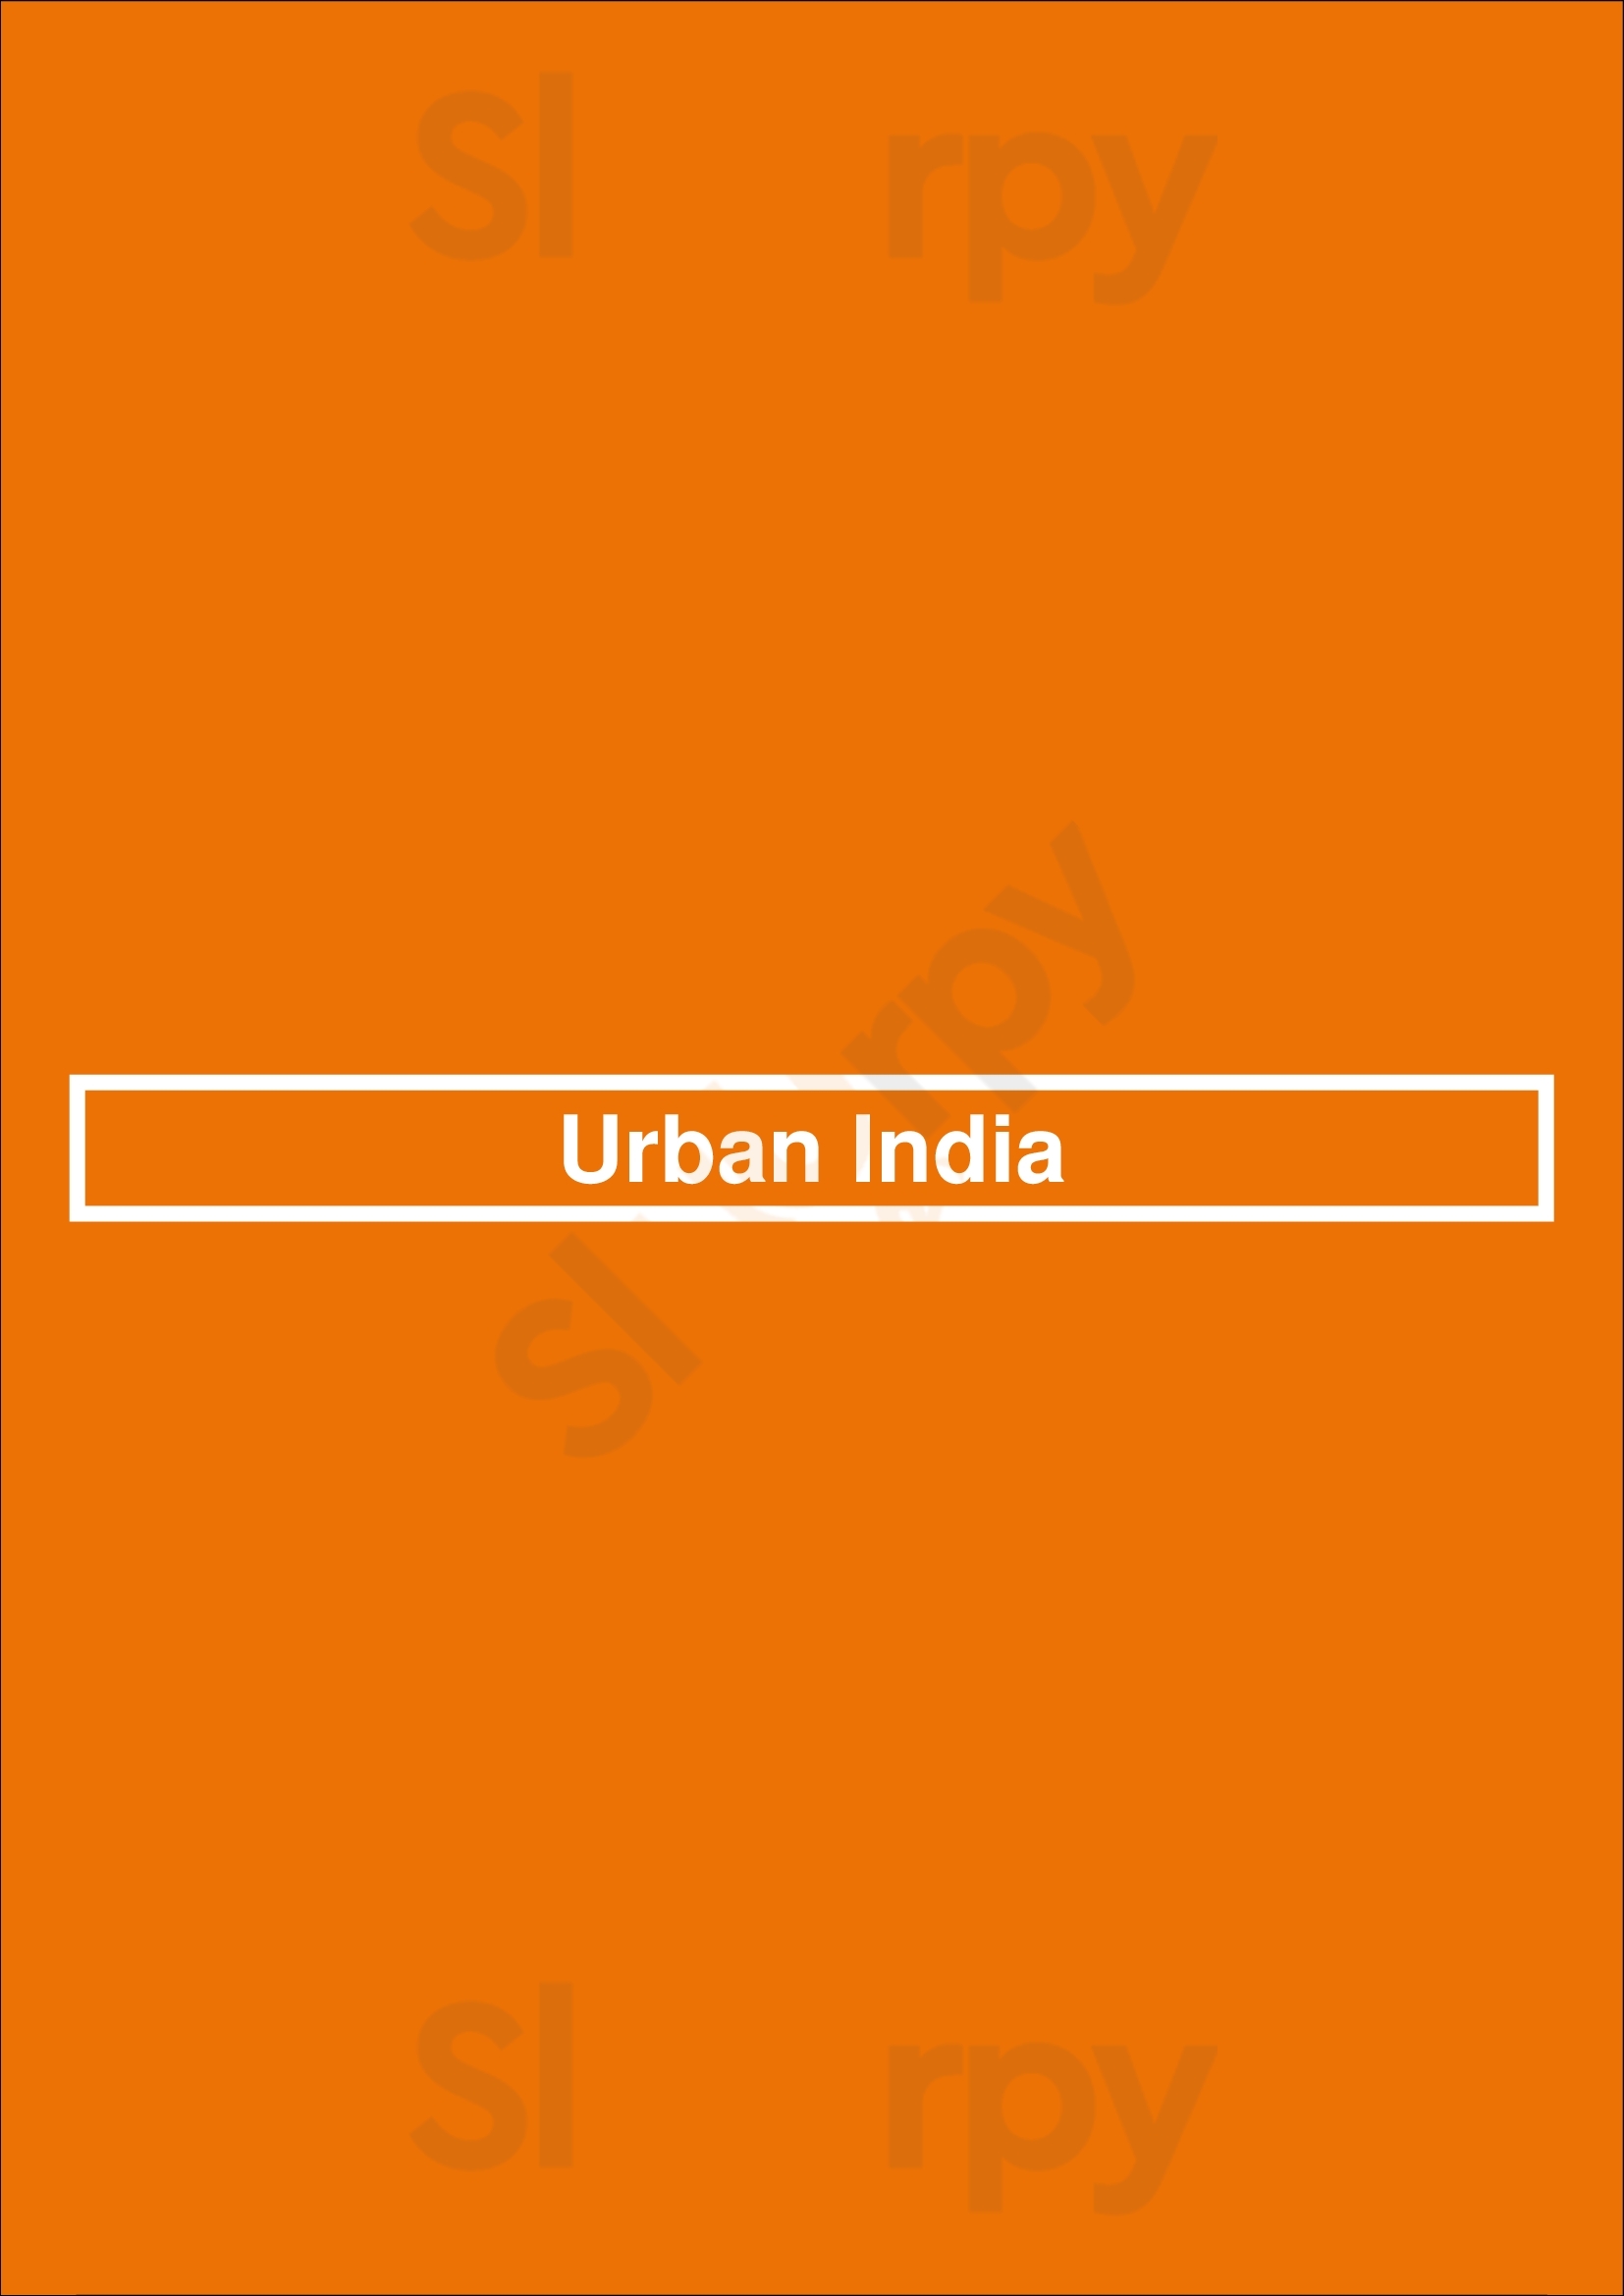 Urban India San Diego Menu - 1